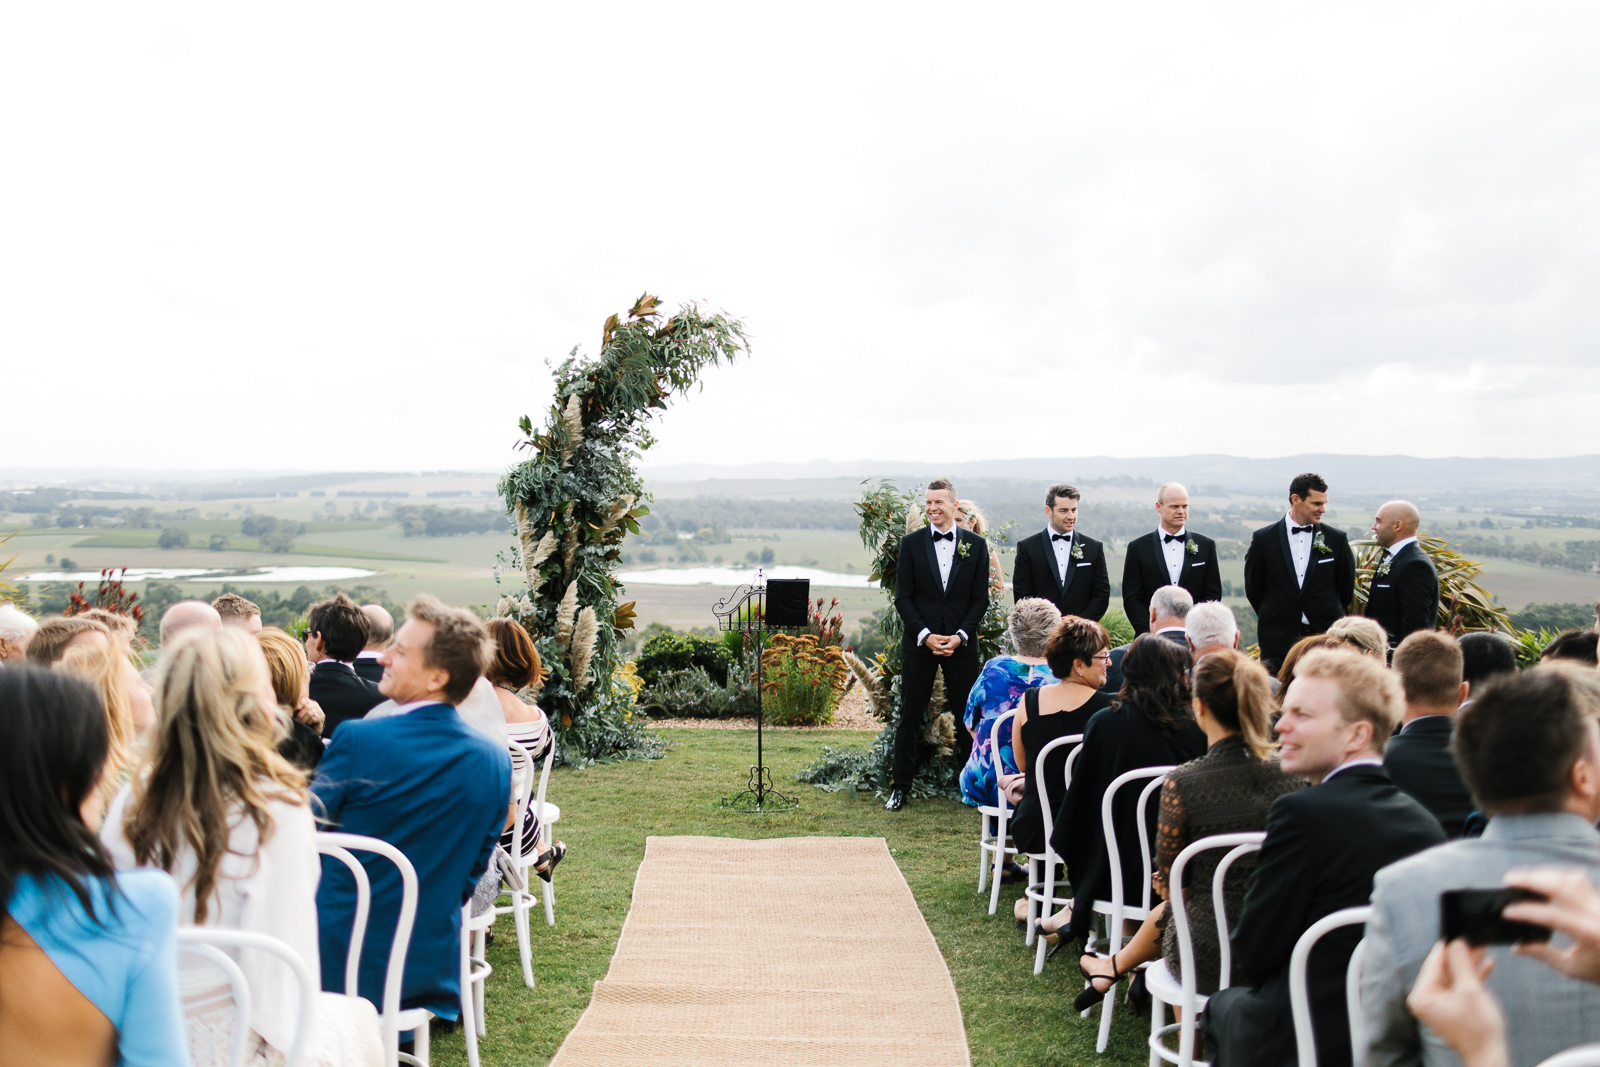 Yarra Valley winery wedding ceremony at Levantine Hill photo by Erin Tara